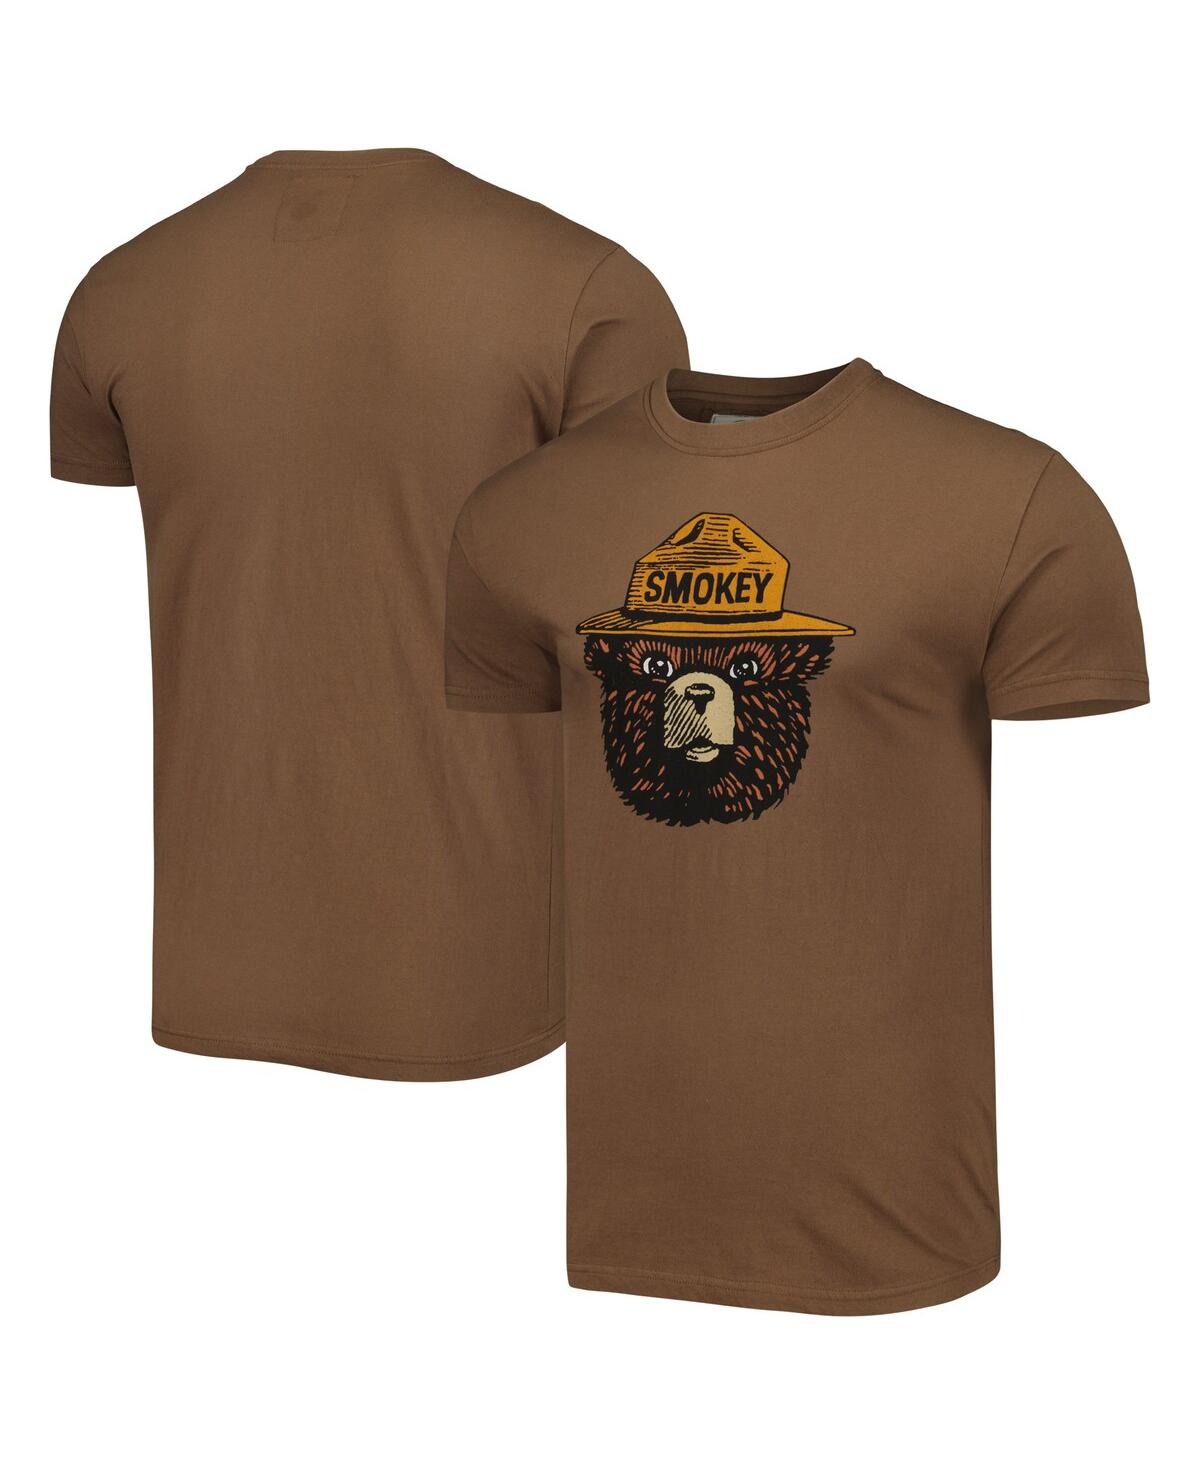 Men's and Women's American Needle Brown Smokey the Bear Brass Tacks T-shirt - Brown